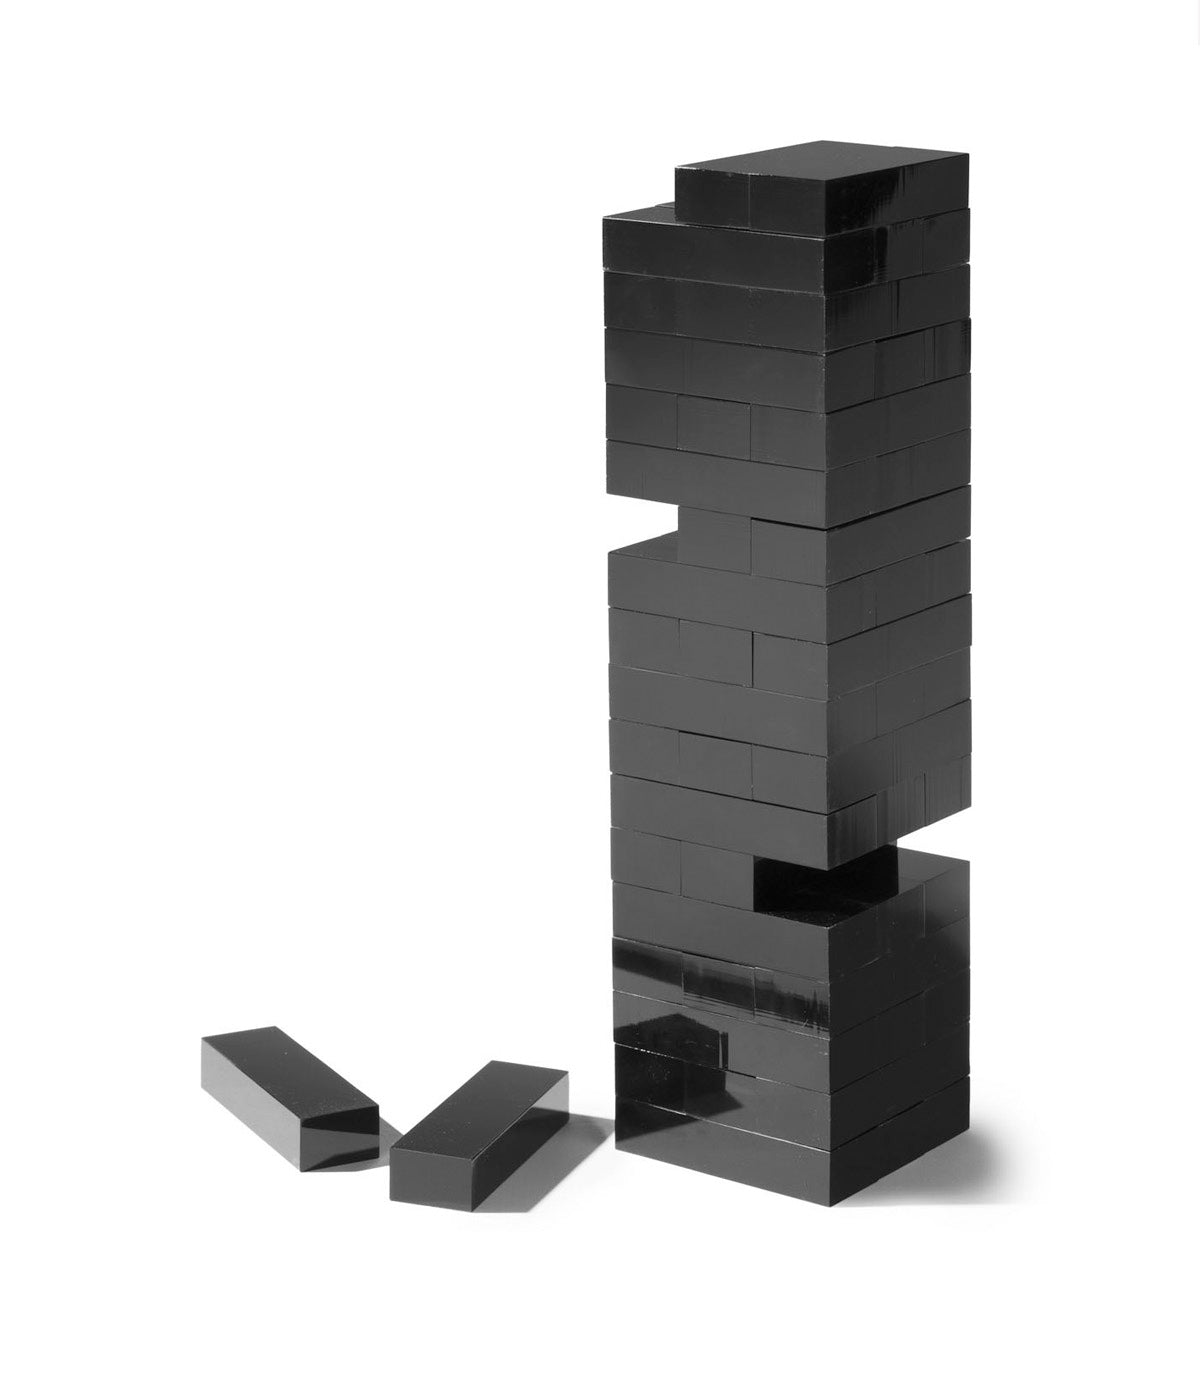 Acrylic Tumbler Tower Set in Black